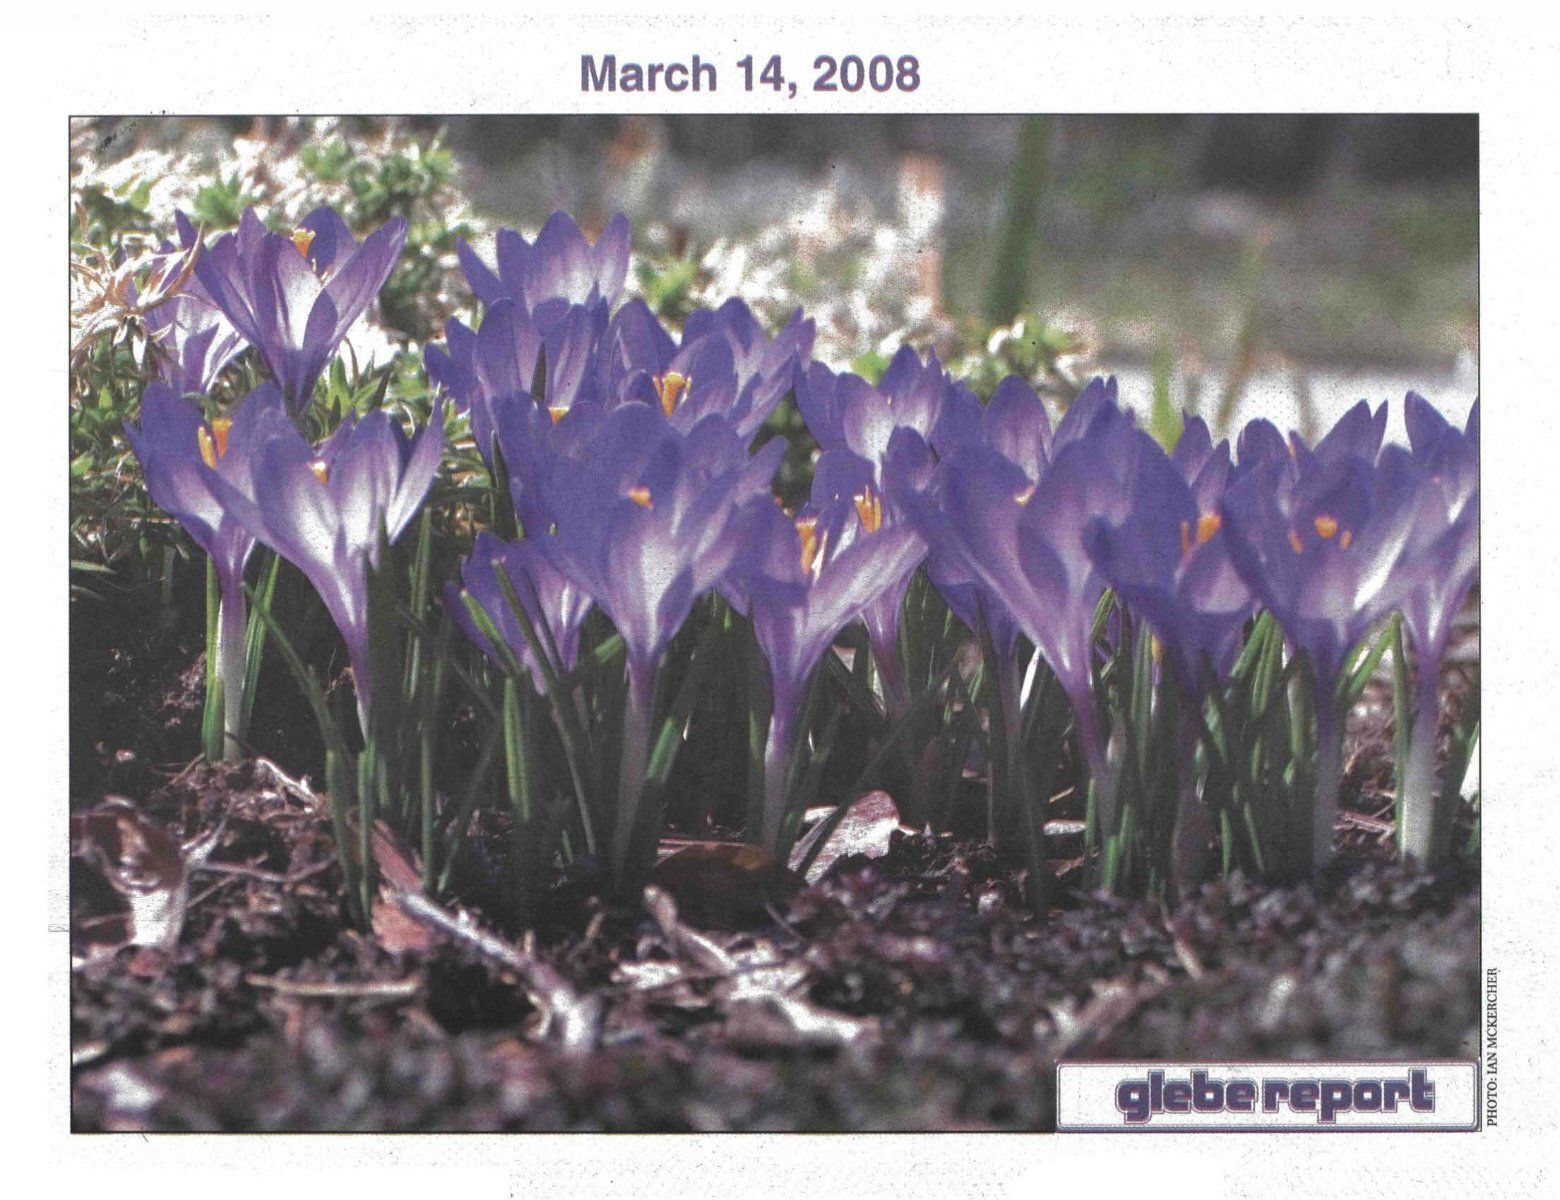 Glebe Report - Volume 38 Number 3 - March 14 2008